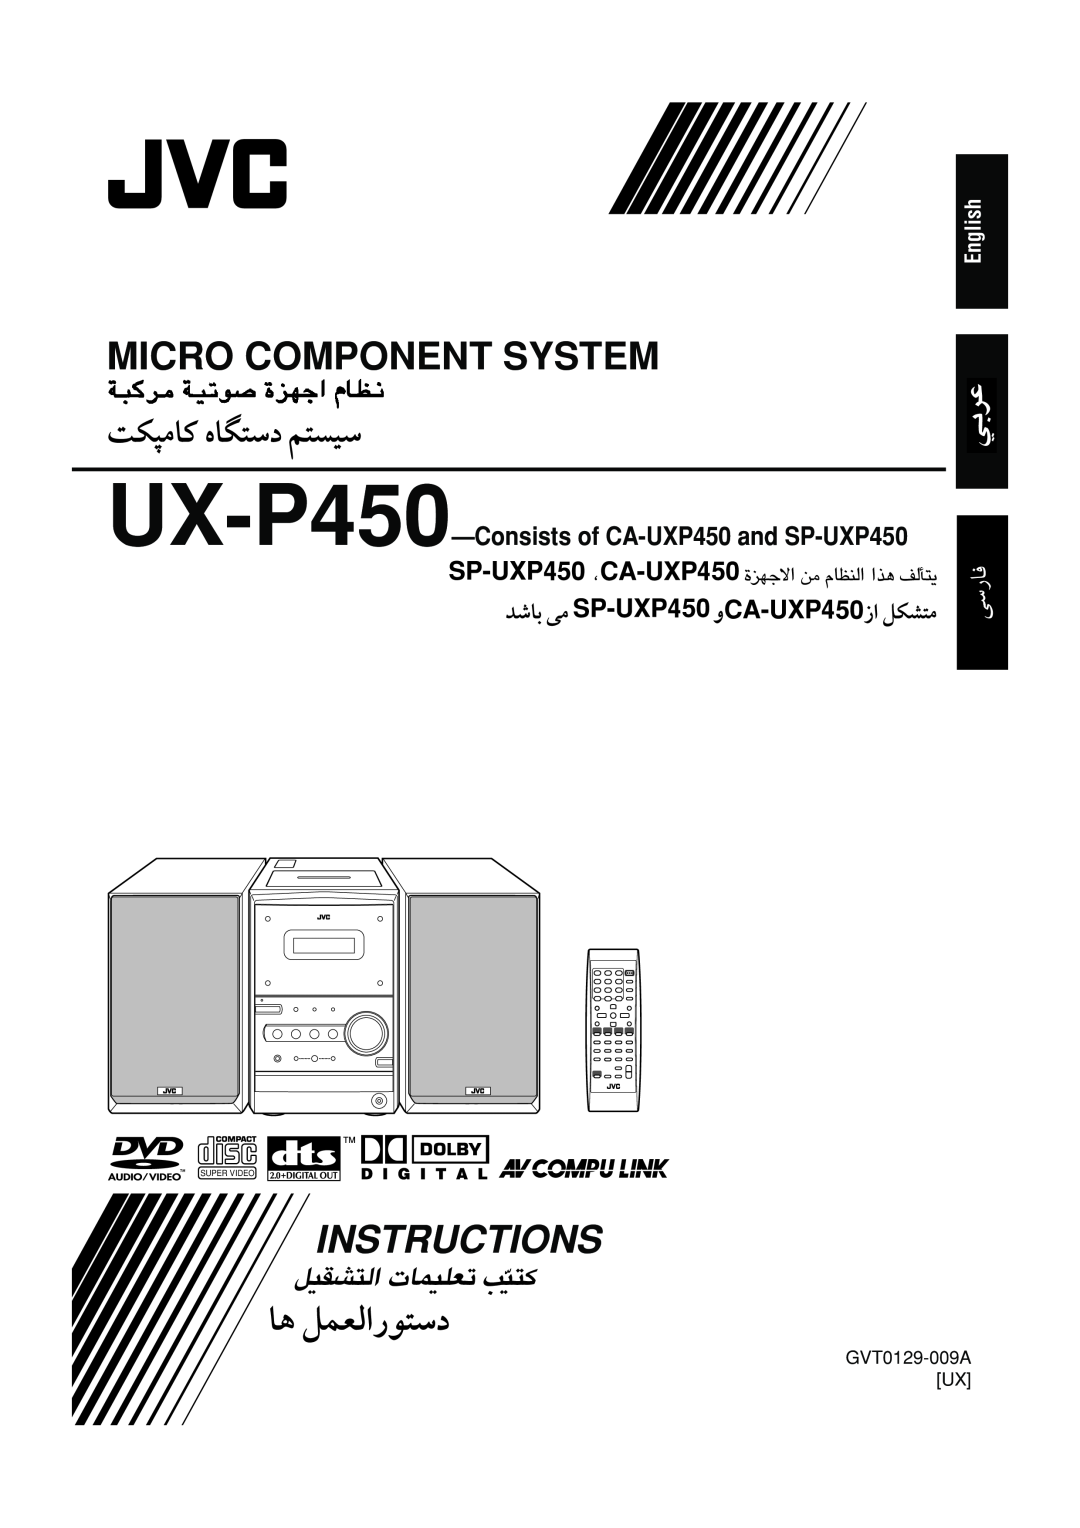 JVC manual Micro Component System, GVT0129-009AUX, Instructions, UX-P450—Consistsof CA-UXP450and SP-UXP450, English 